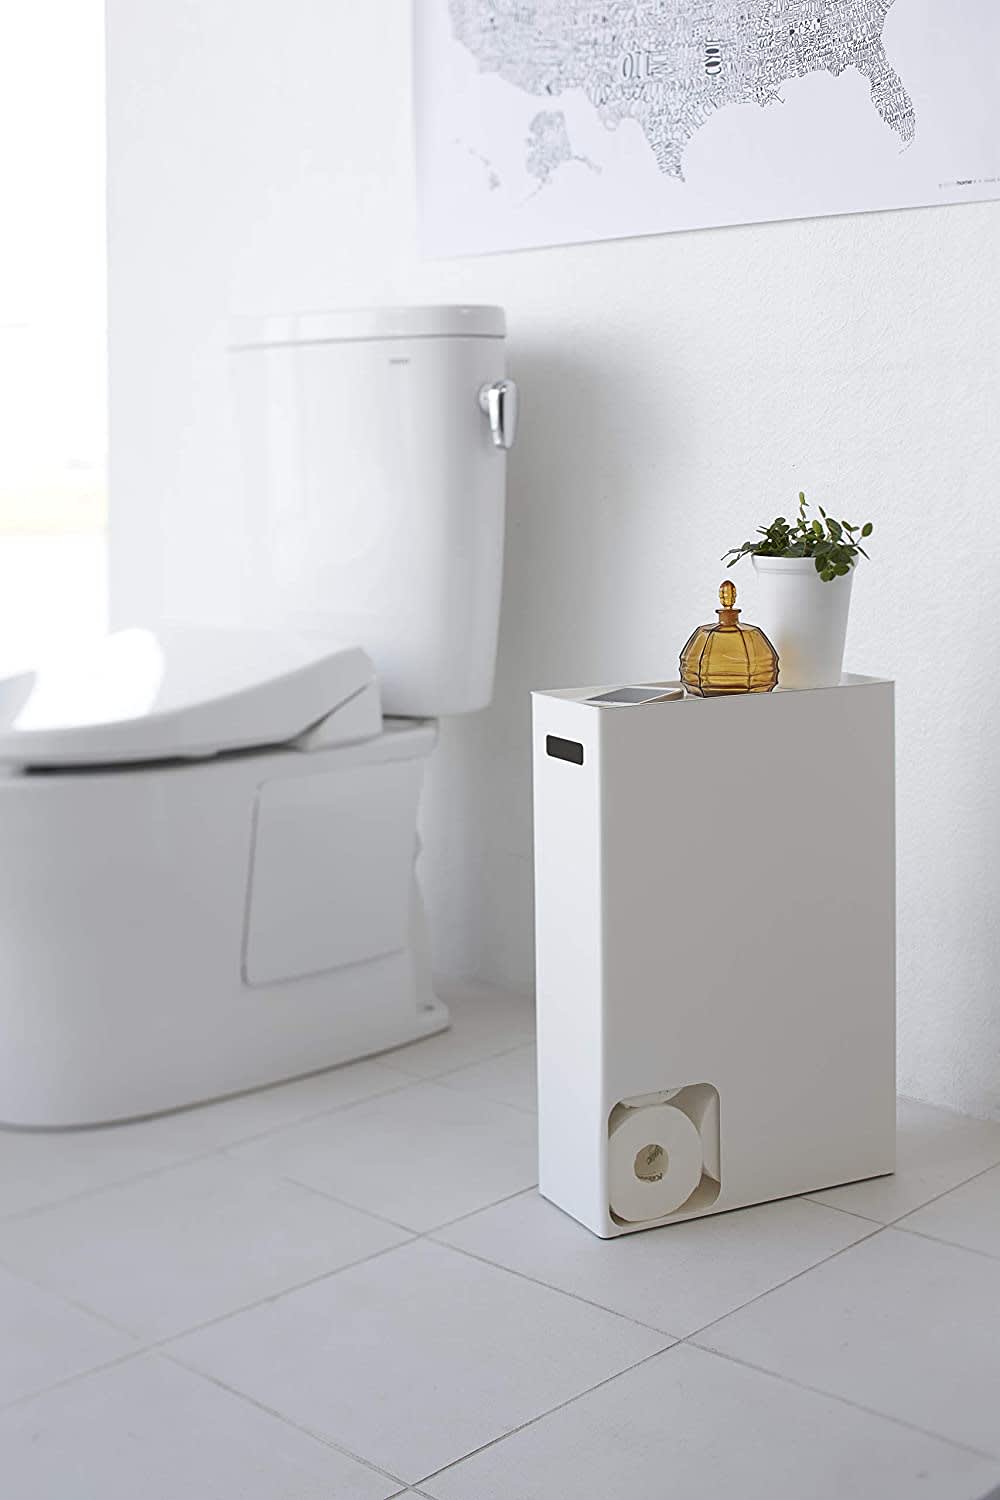 DlandHome 20 x 20 x 68.5CM Toilet Paper Roll Holder Storage Cabinet Bathroom Small Floor Standing Narrow Cupboard with Door Unit Wooden White 